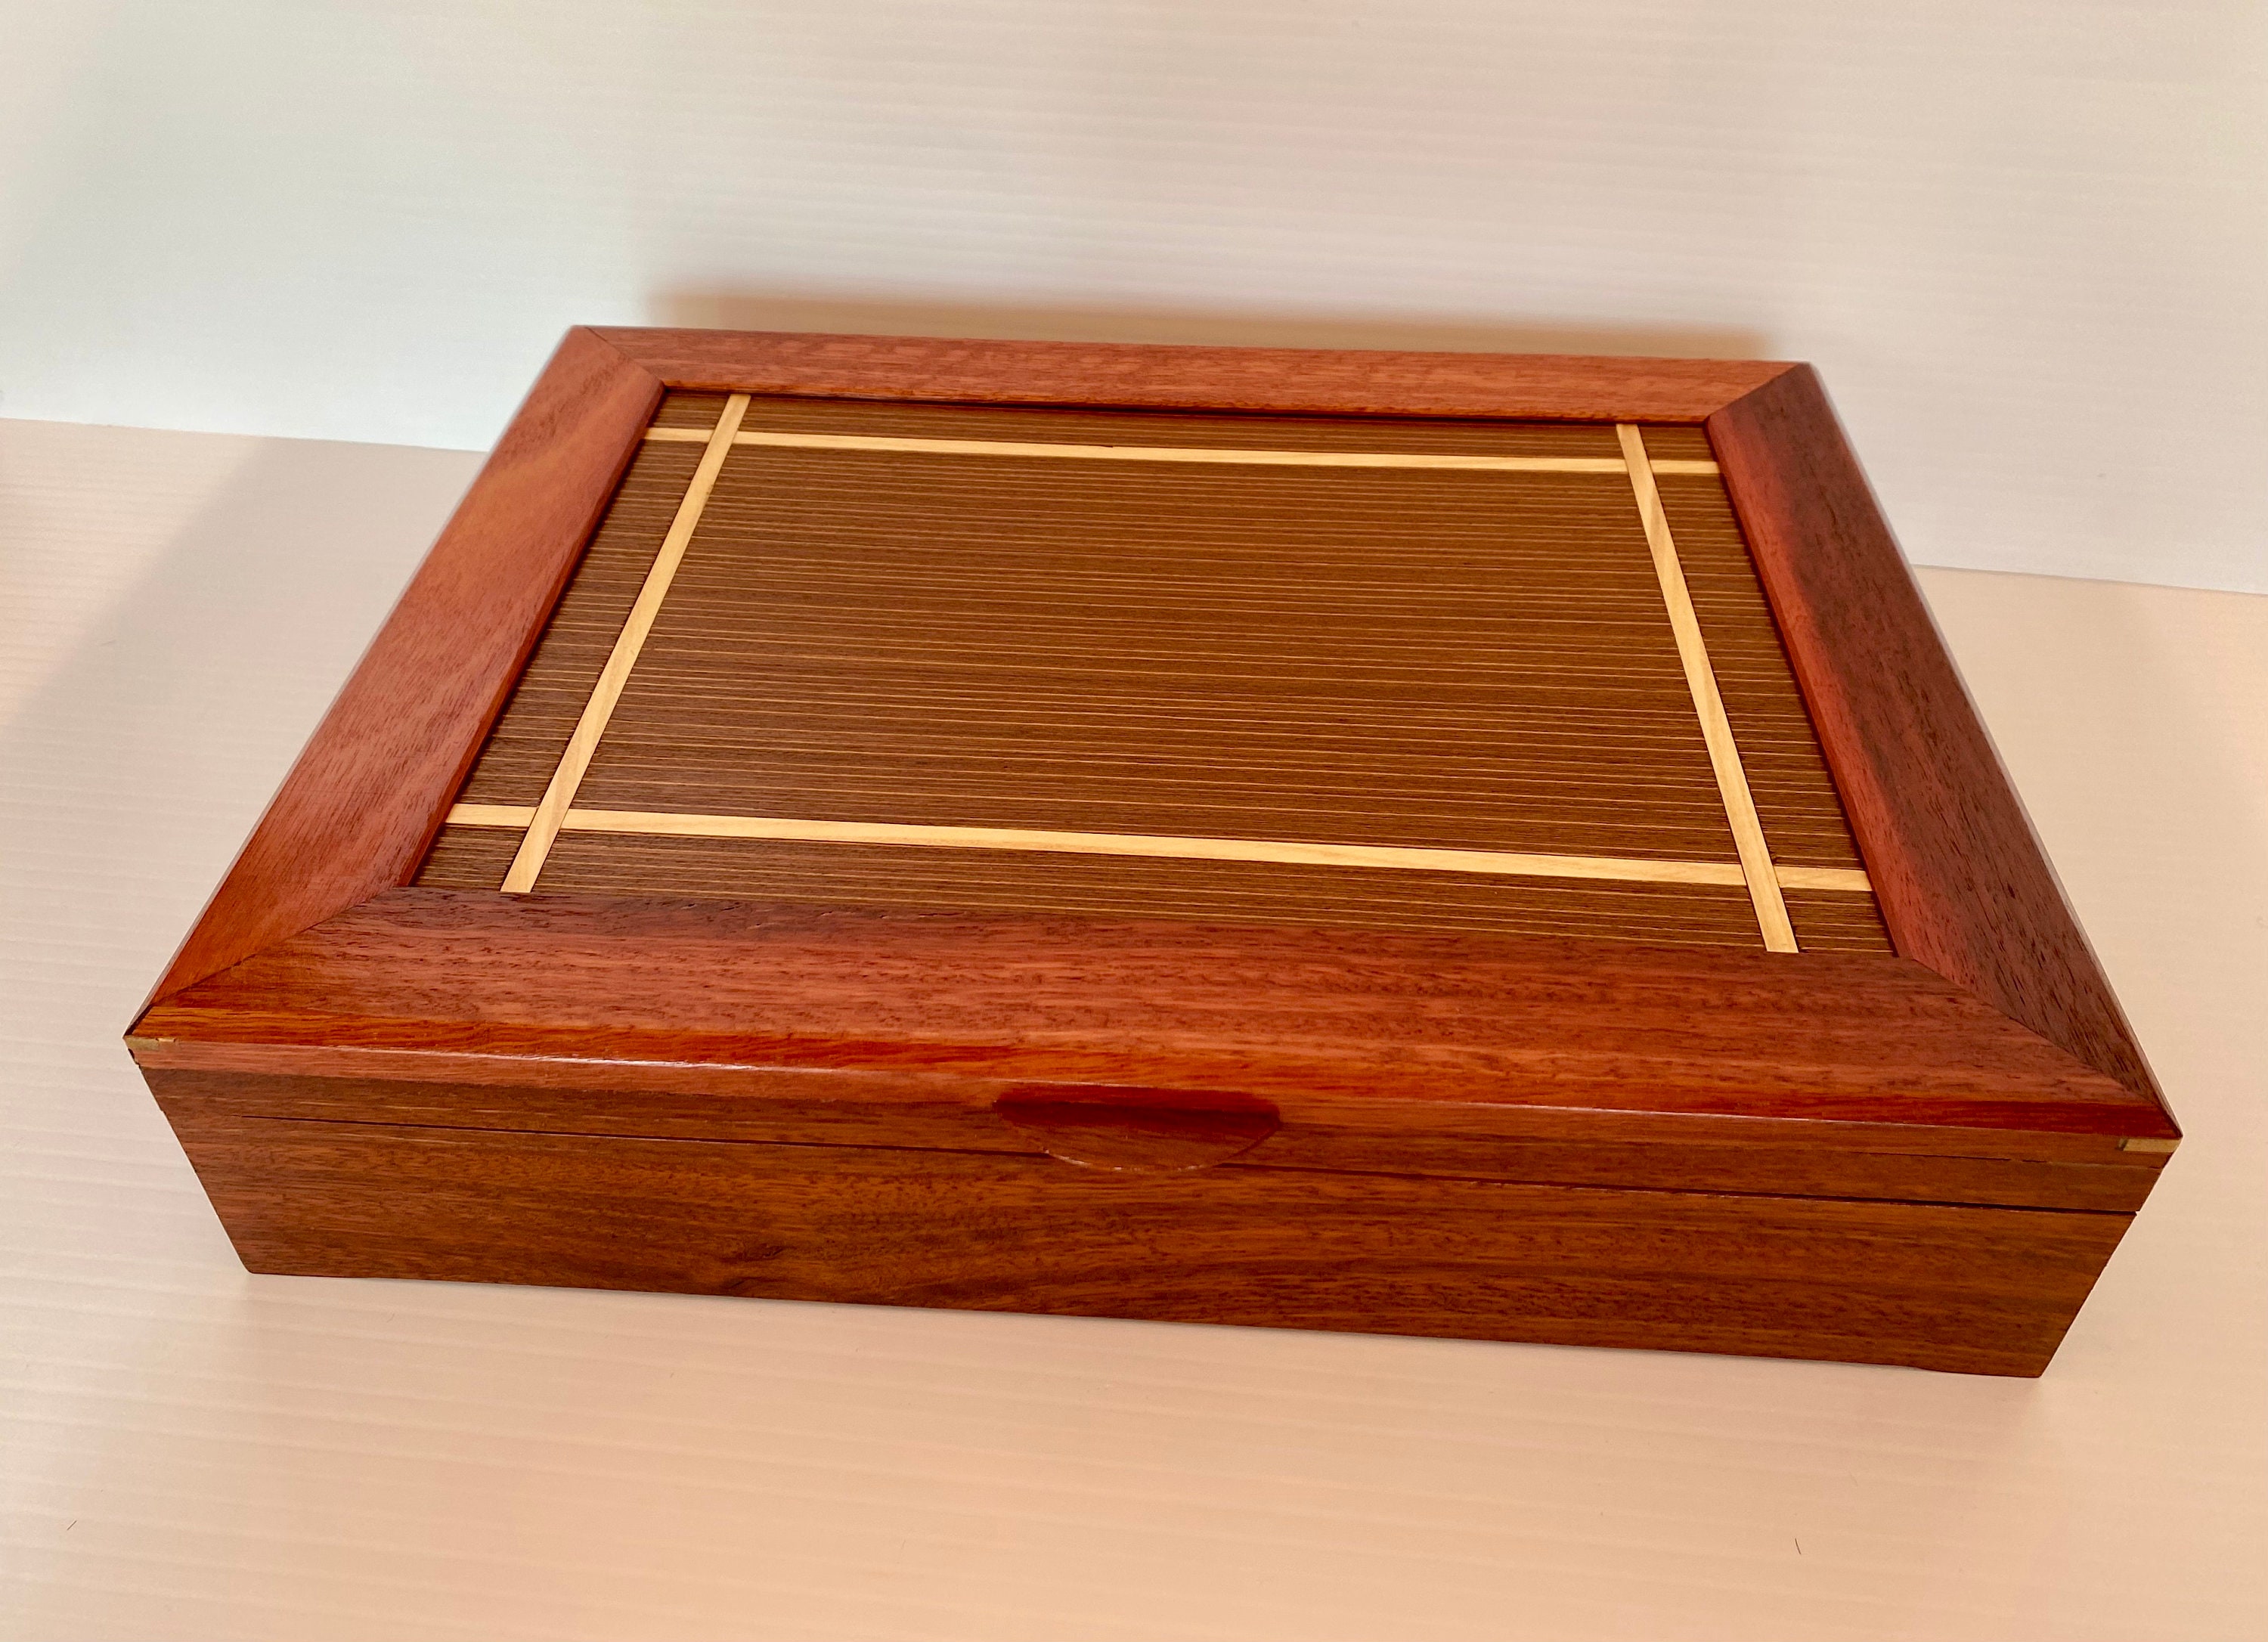 Domed Box of Red Wood Veneer With Velvet Lining